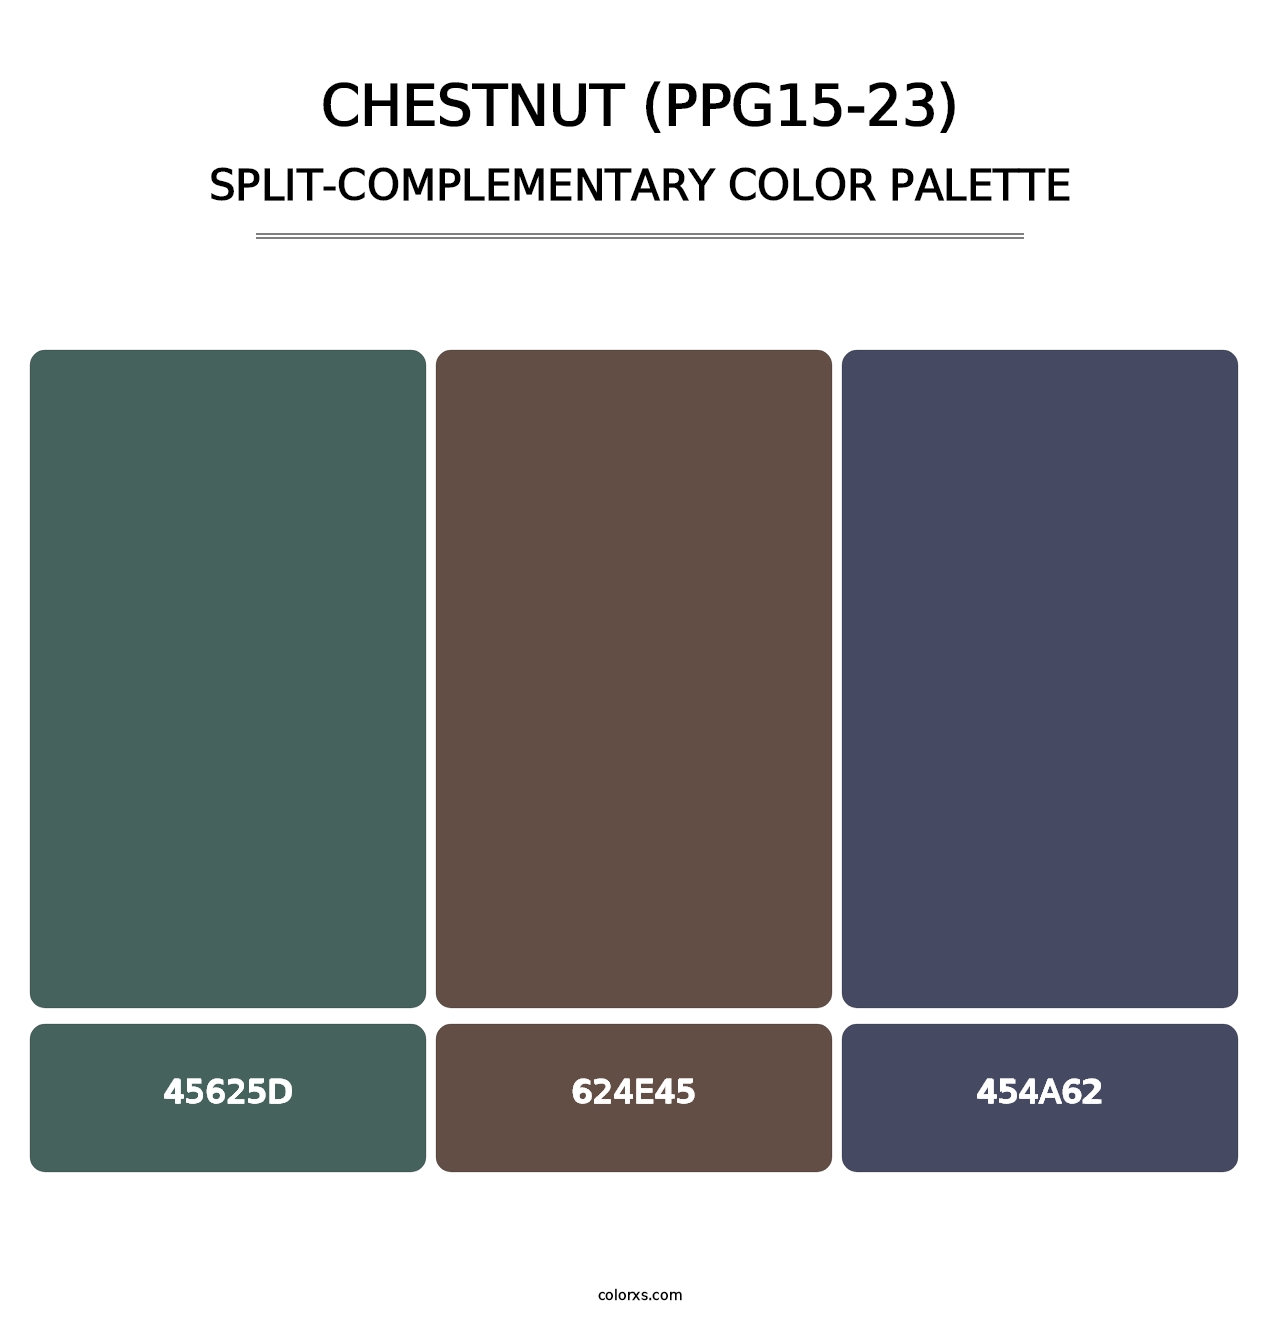 Chestnut (PPG15-23) - Split-Complementary Color Palette